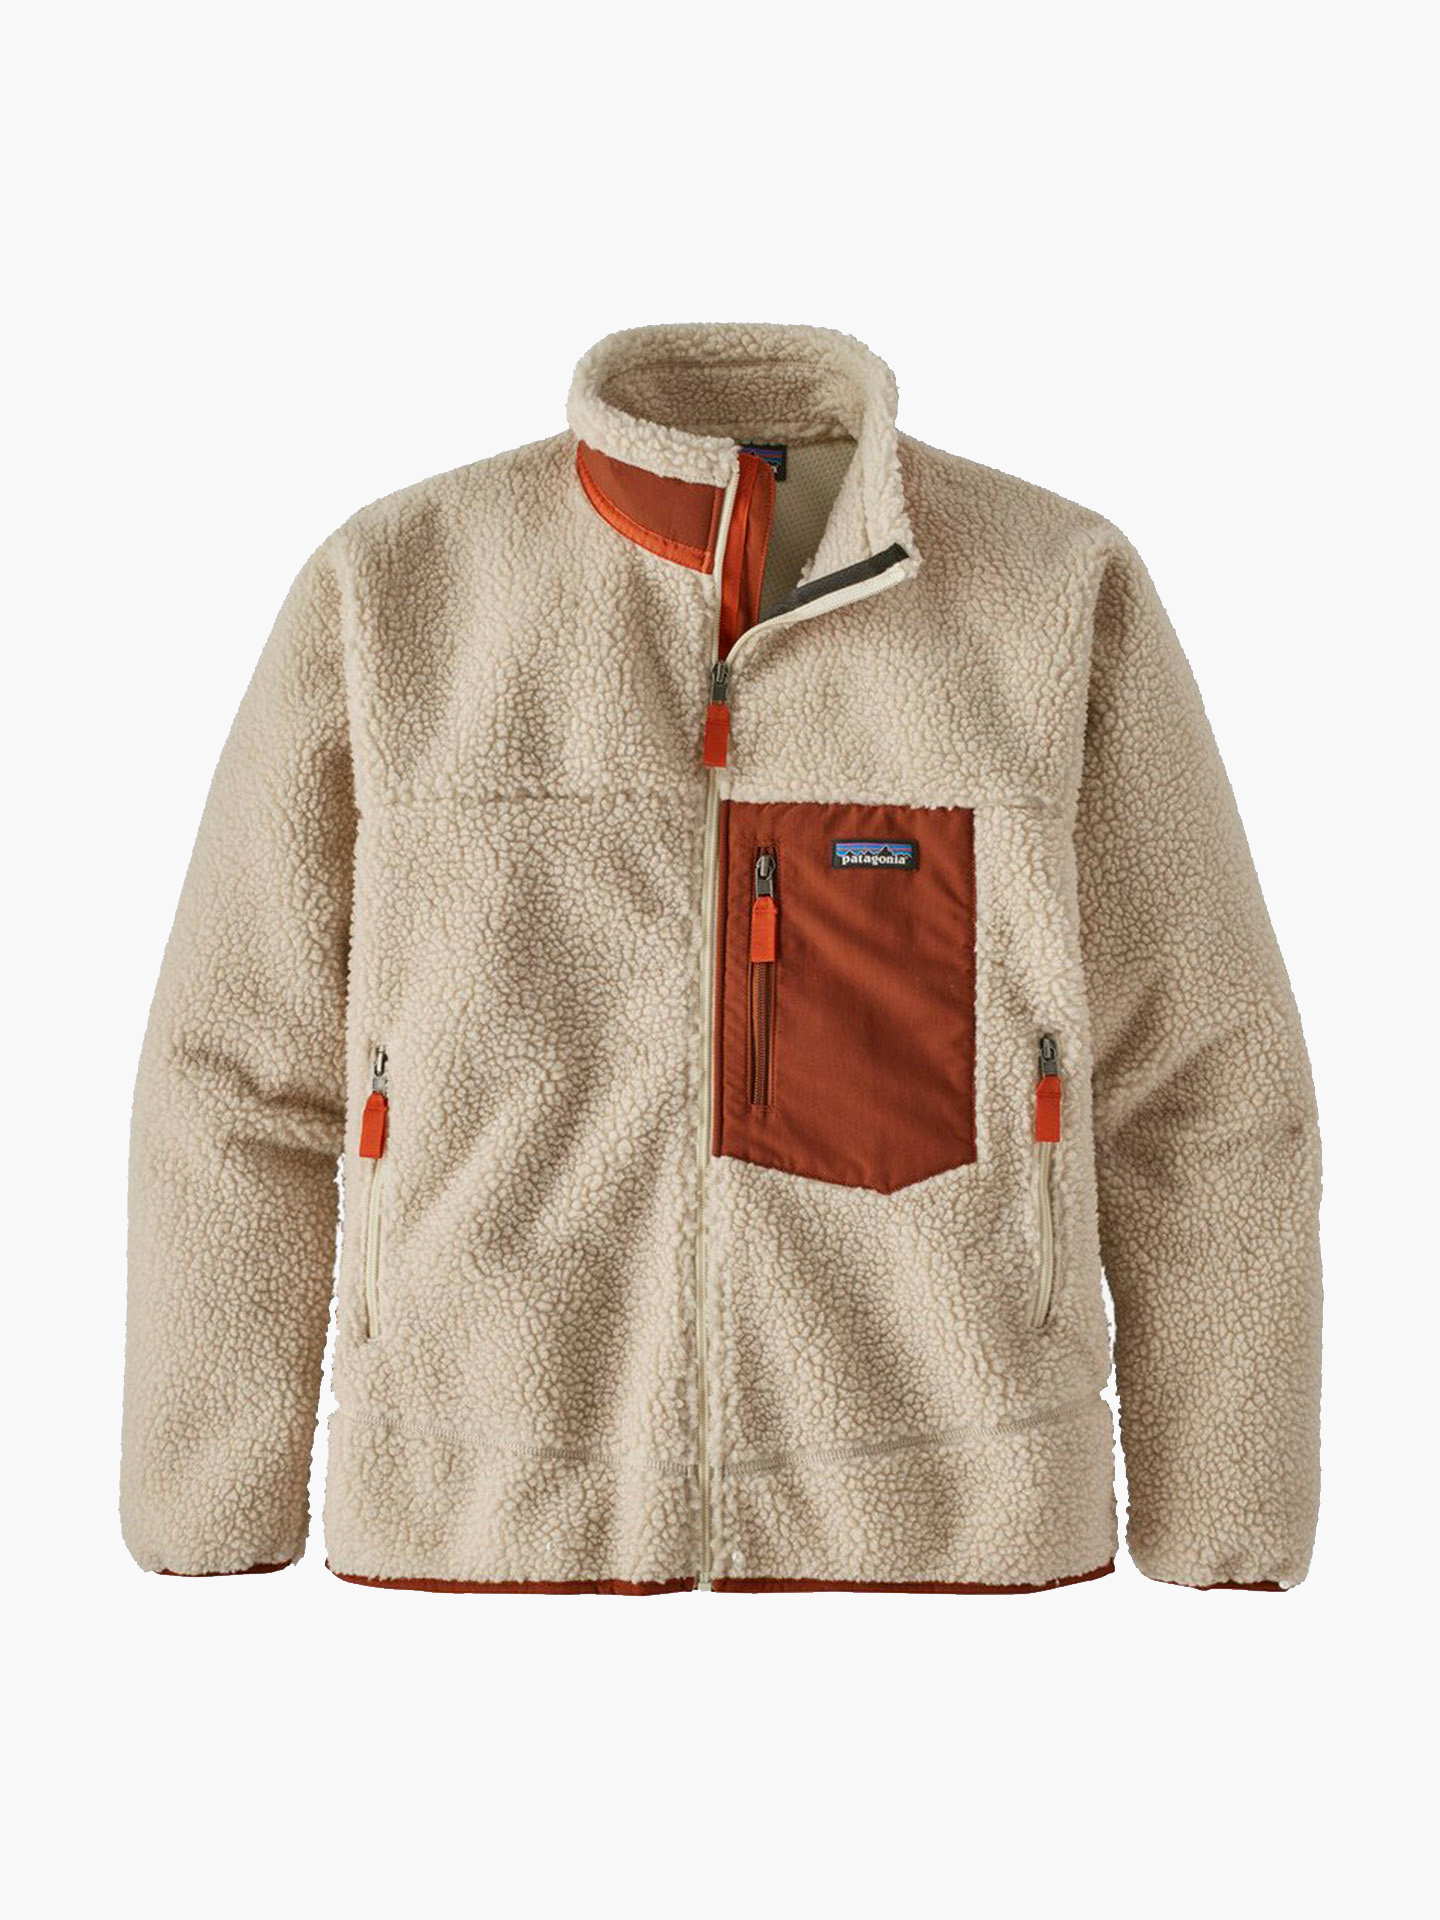 377668/M Куртка Patagonia M'S CLASSIC RETRO-X JKT, Цвет NBAR Natural w/Barn Red, M